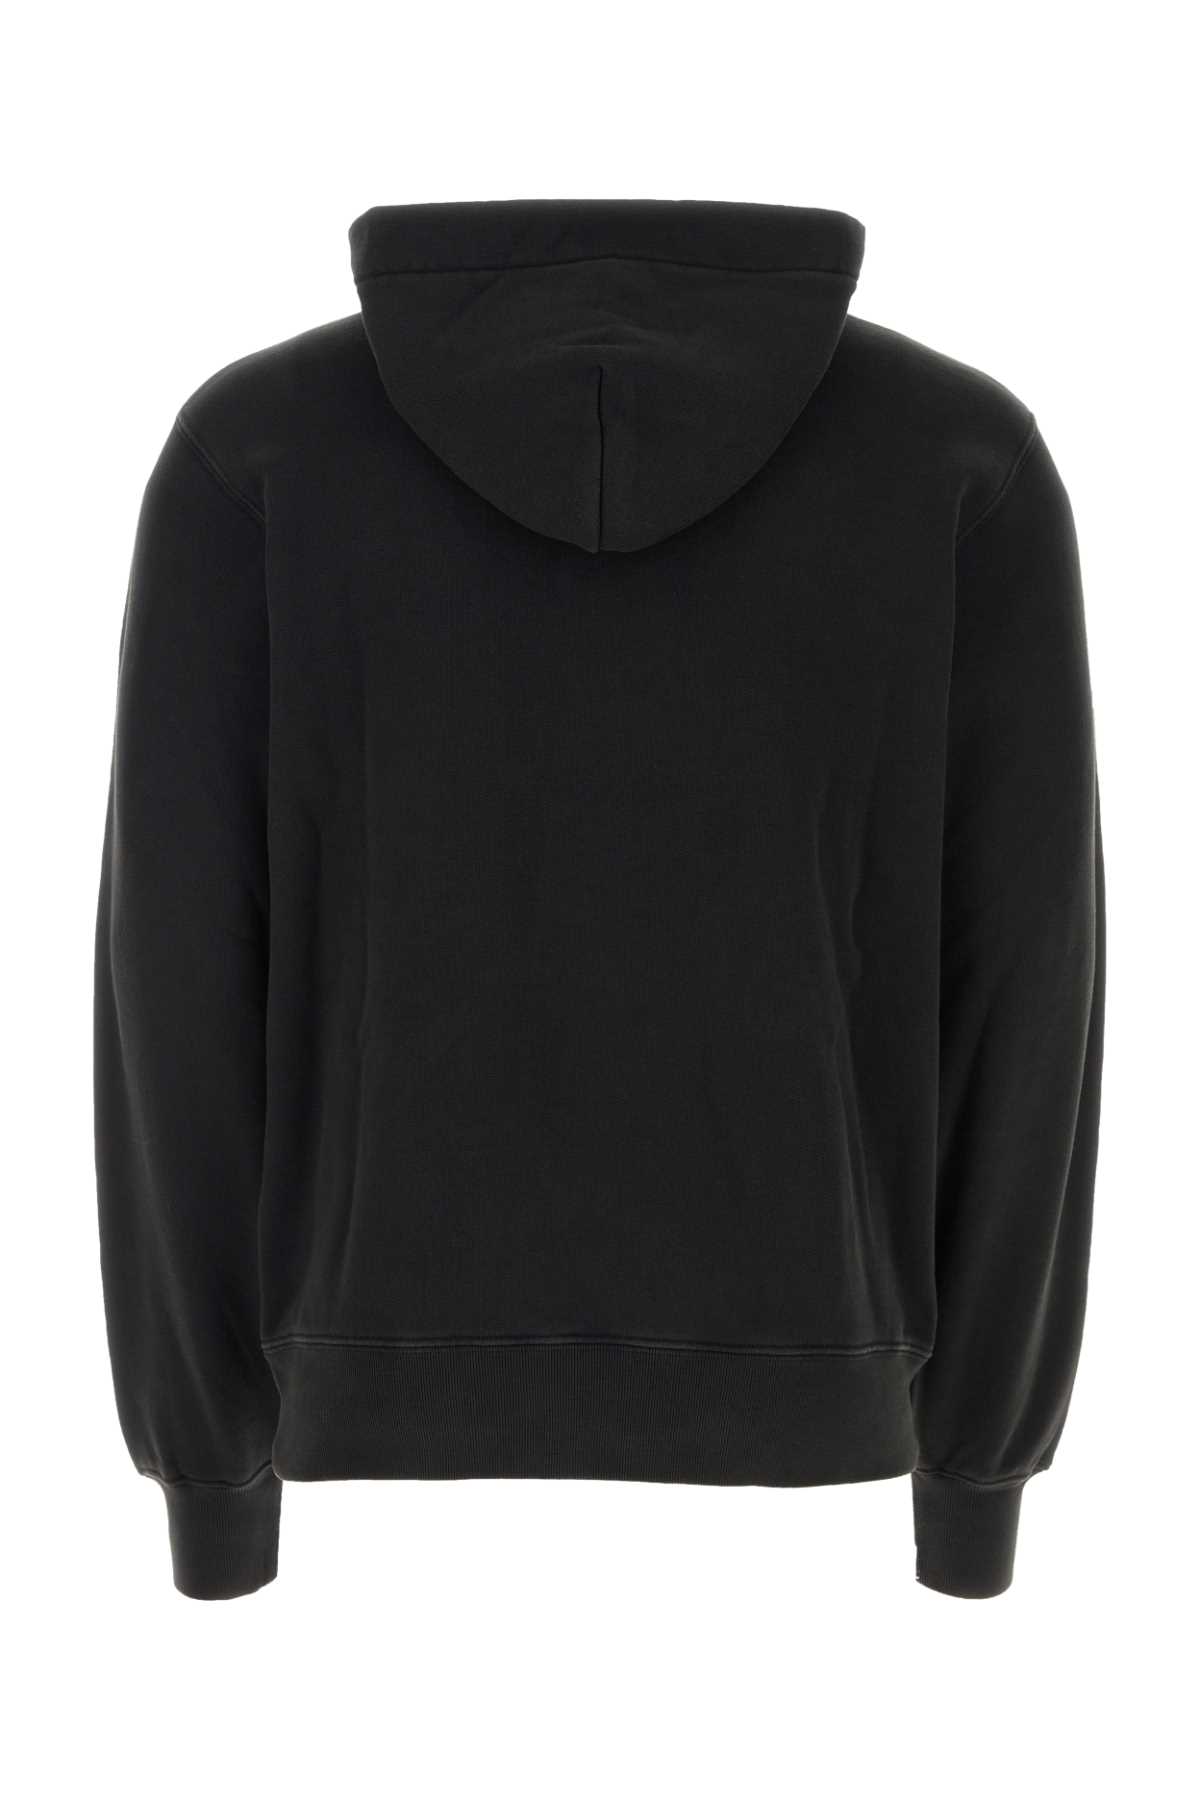 Ambush Black Cotton Oversize Sweatshirt In Tapshoet